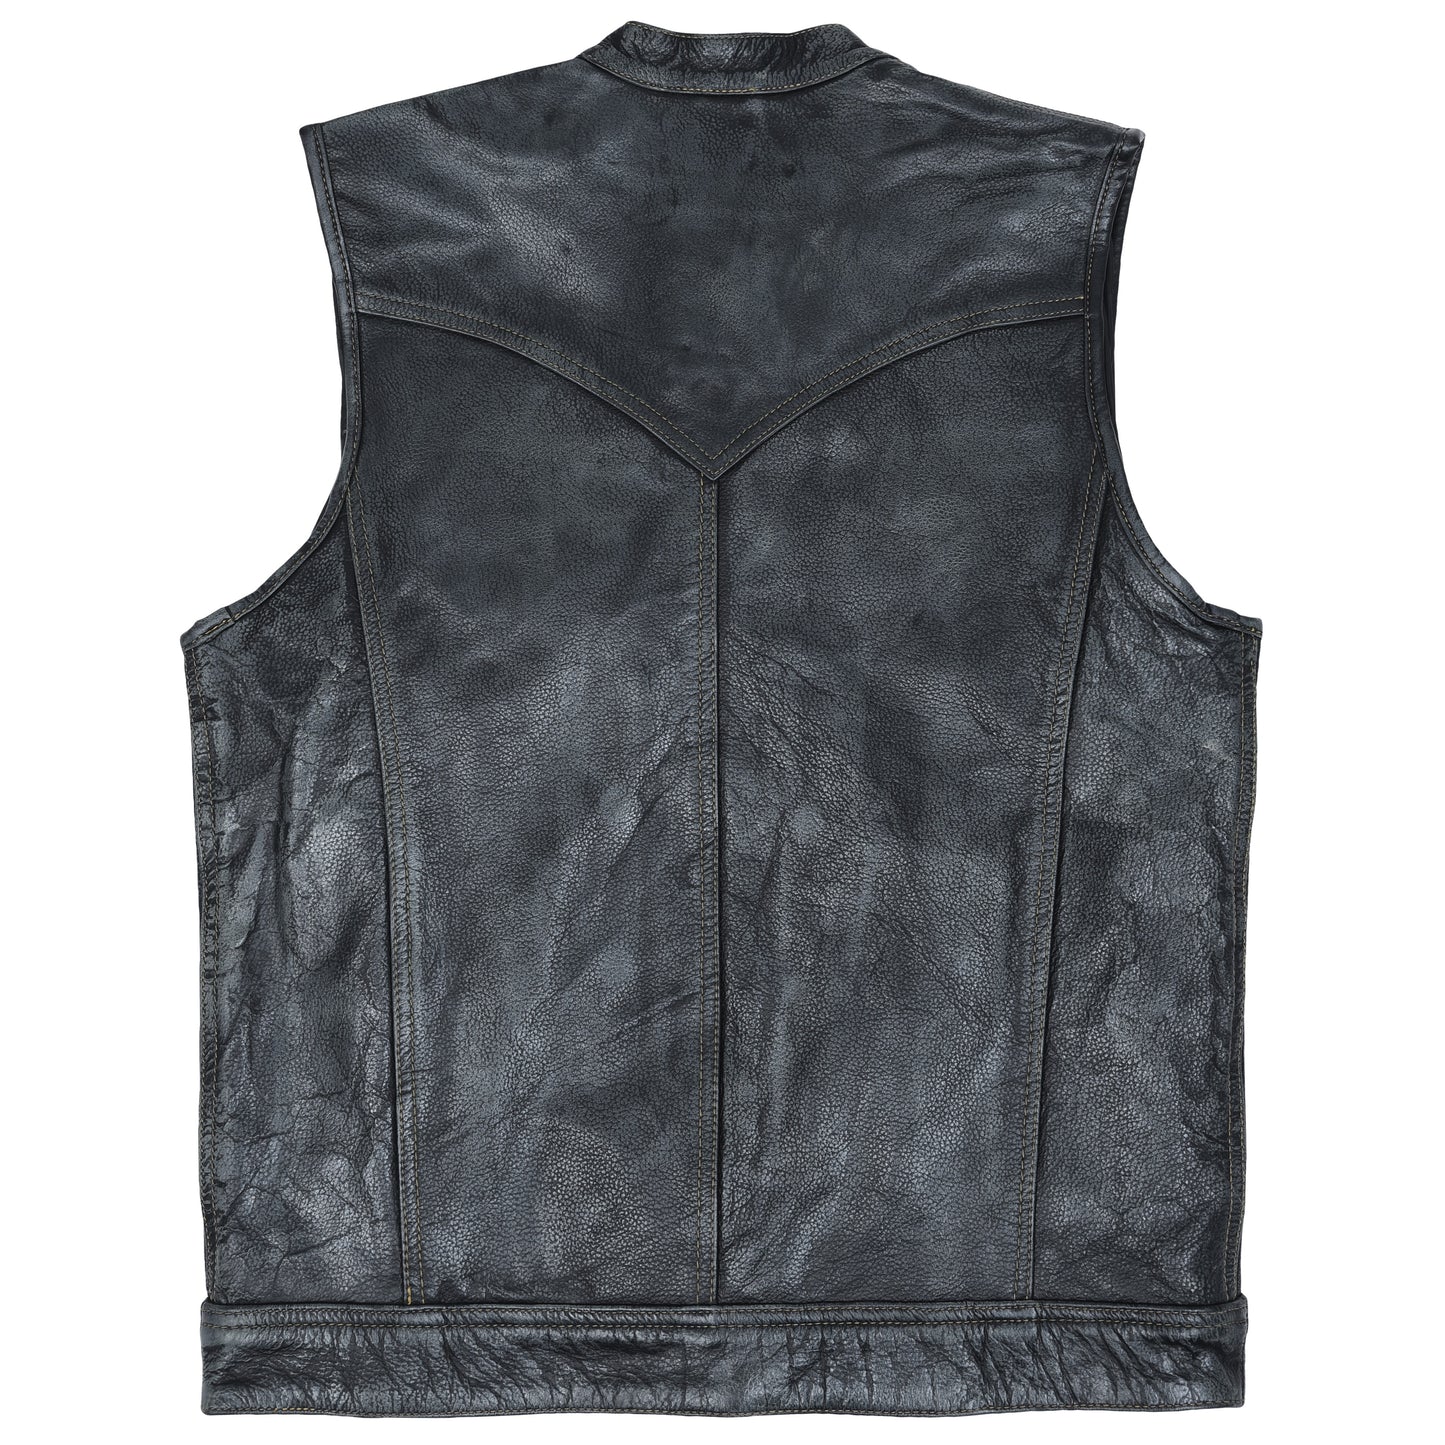 ZAWIAR Men's Grey Distressed Club Style Classic Motorcycle Waistcoat Vest for Bikers